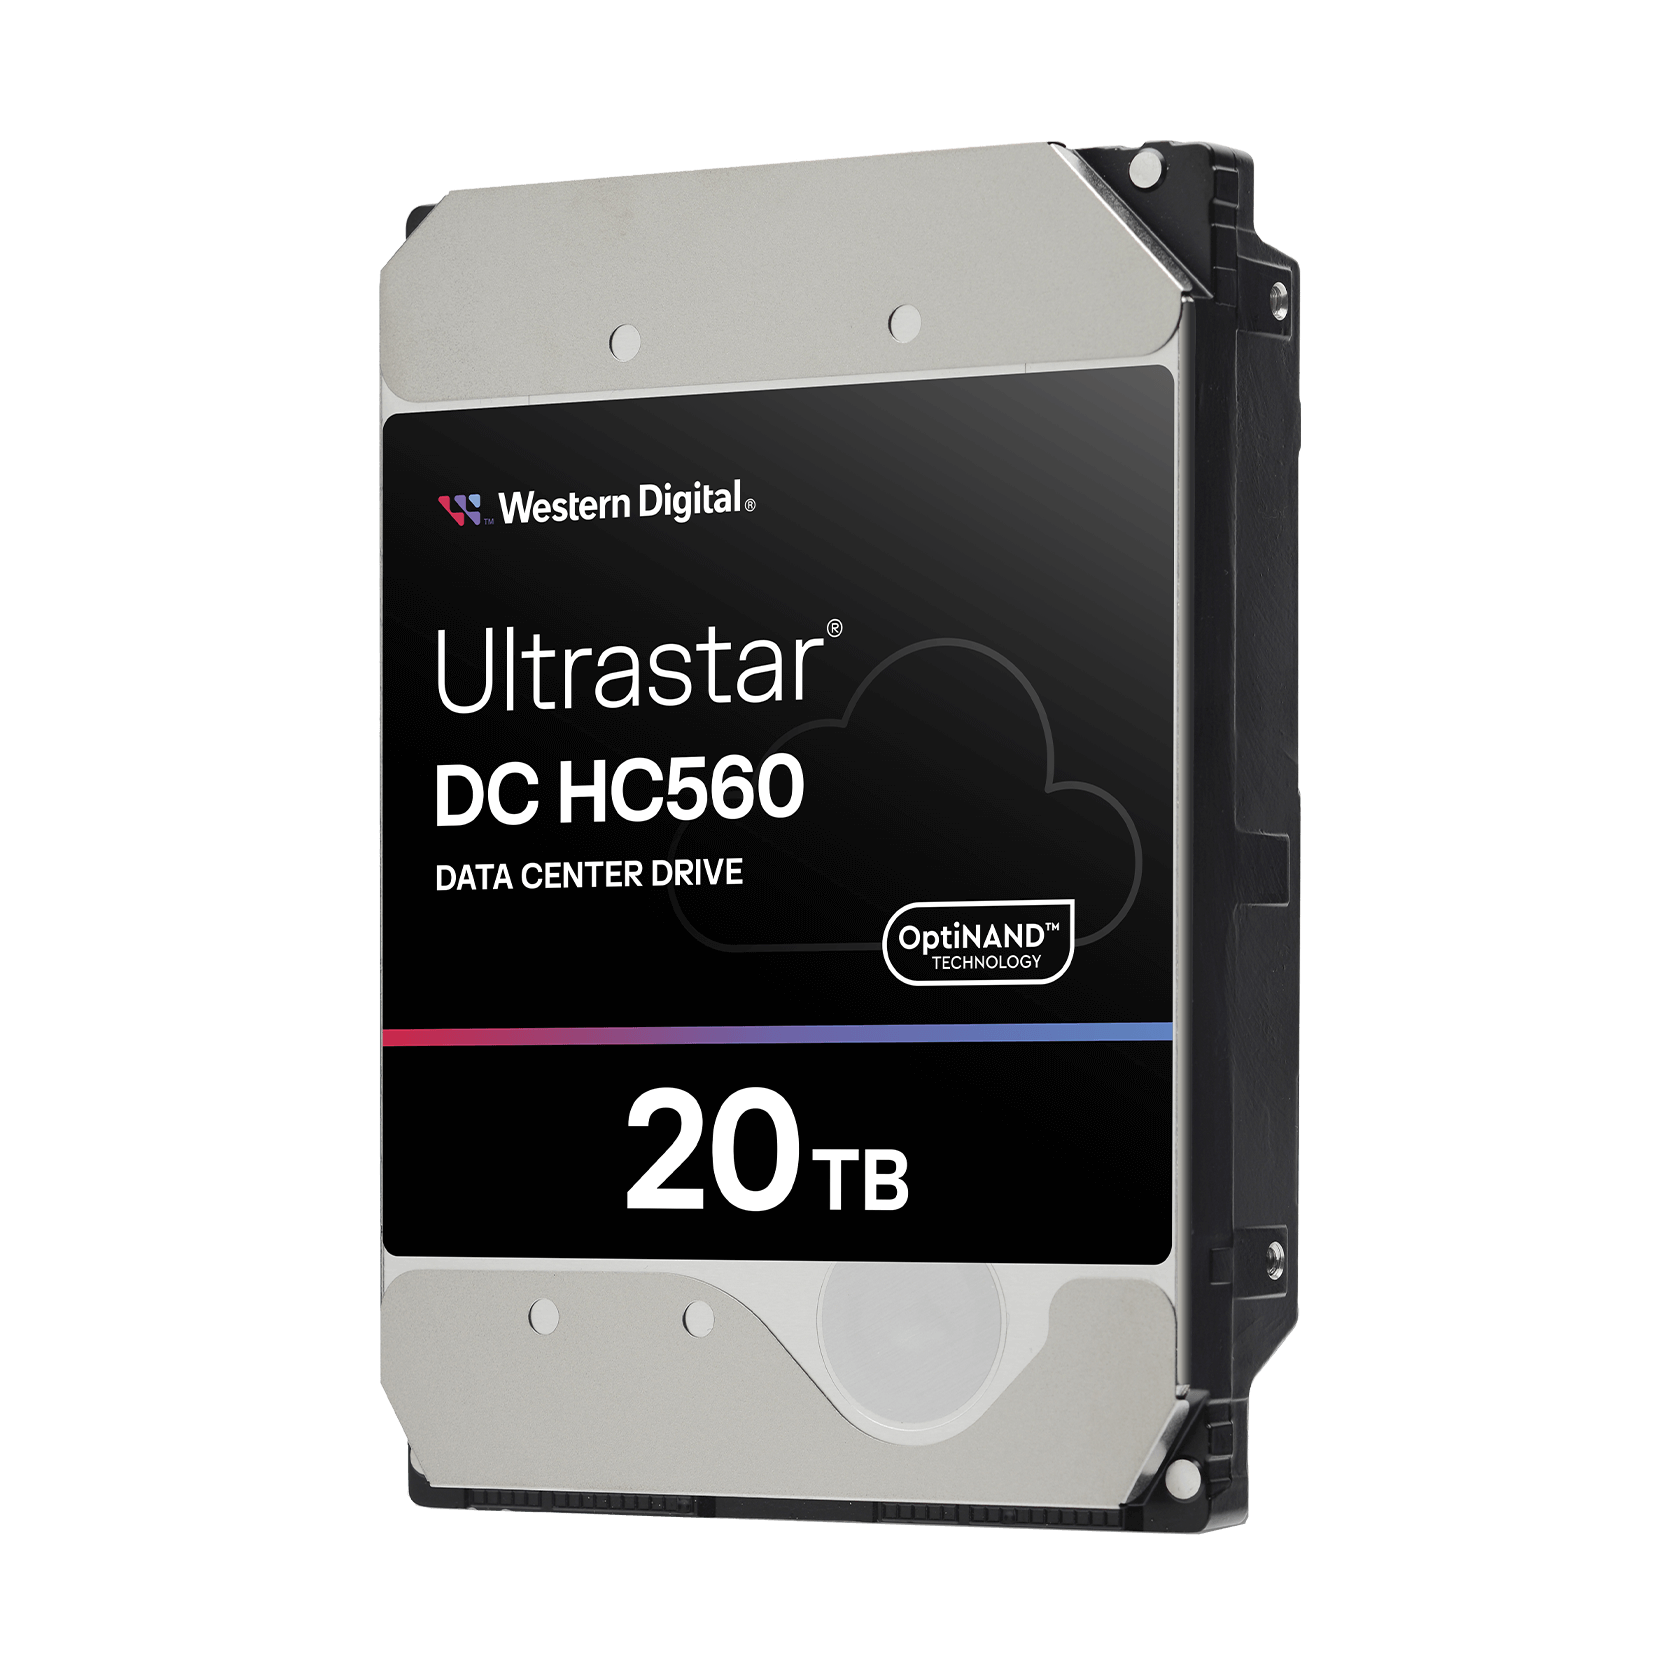 Western Digital 20TB Ultrastar® DC HC560 - Internal Hard Drive - 0F38755